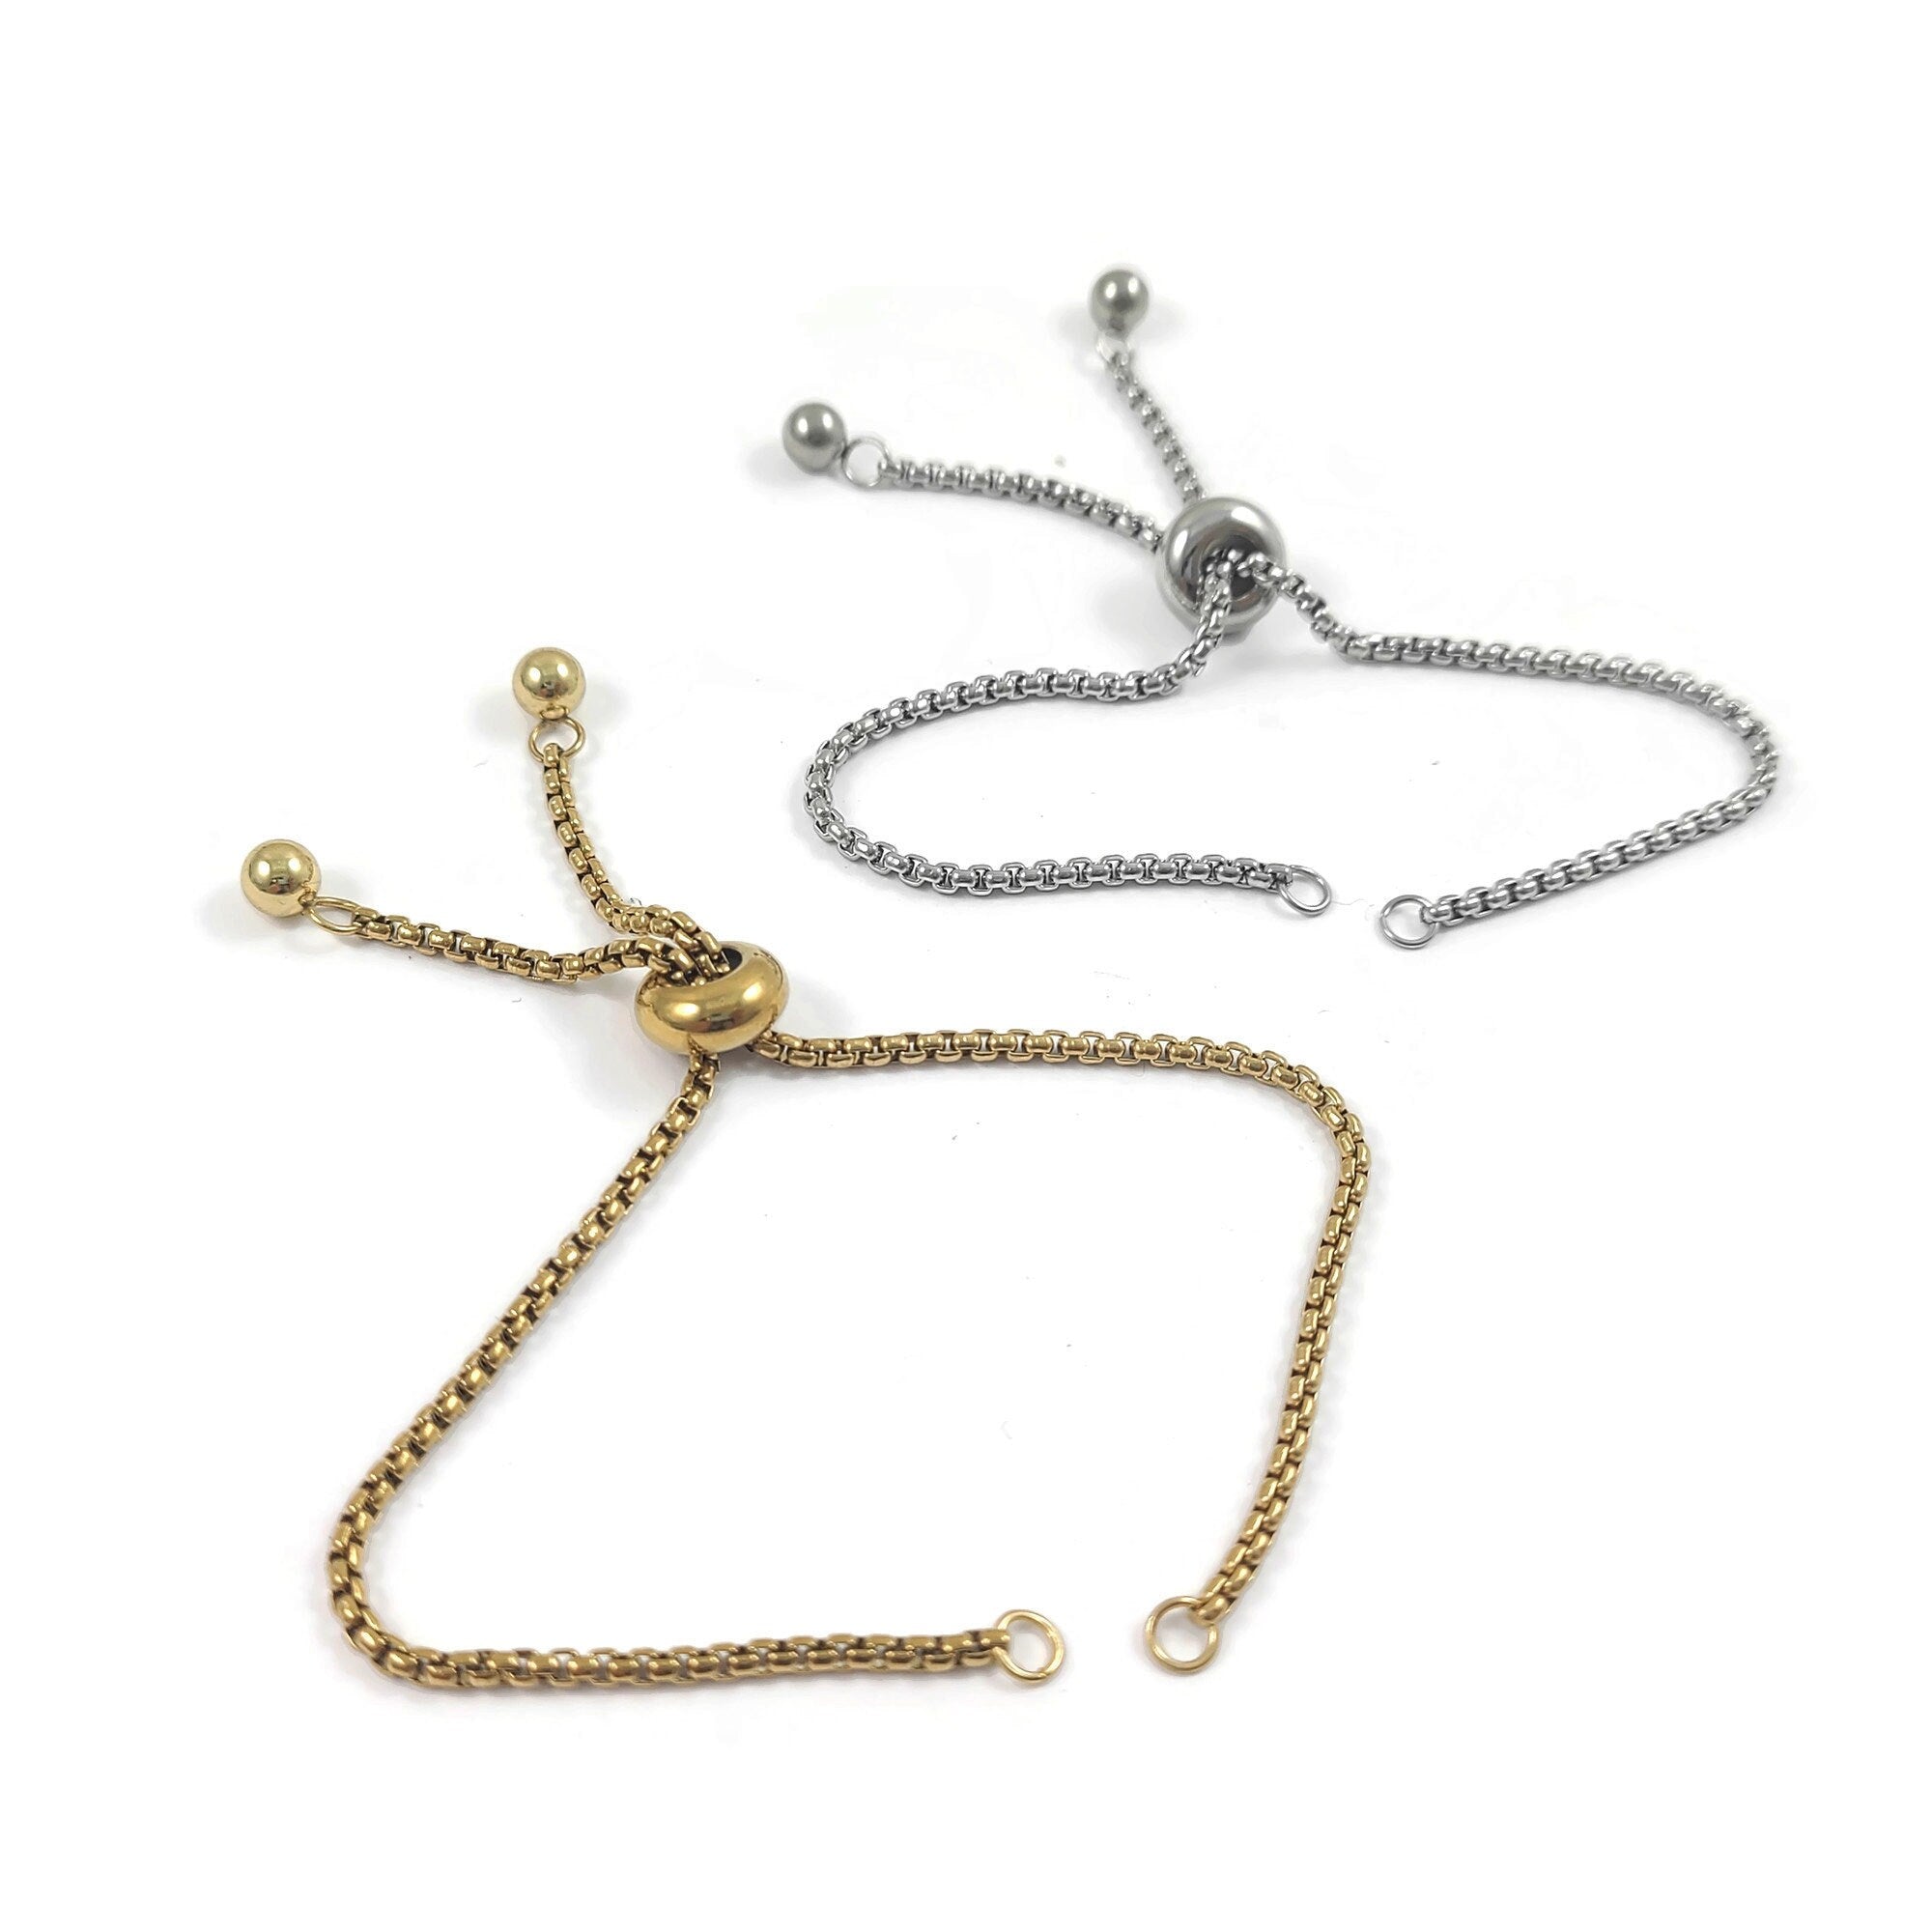 Adjustable chain for slider bracelet making, Stainless steel, Bulk lot, Hypoallergenic jewelry finding supplies